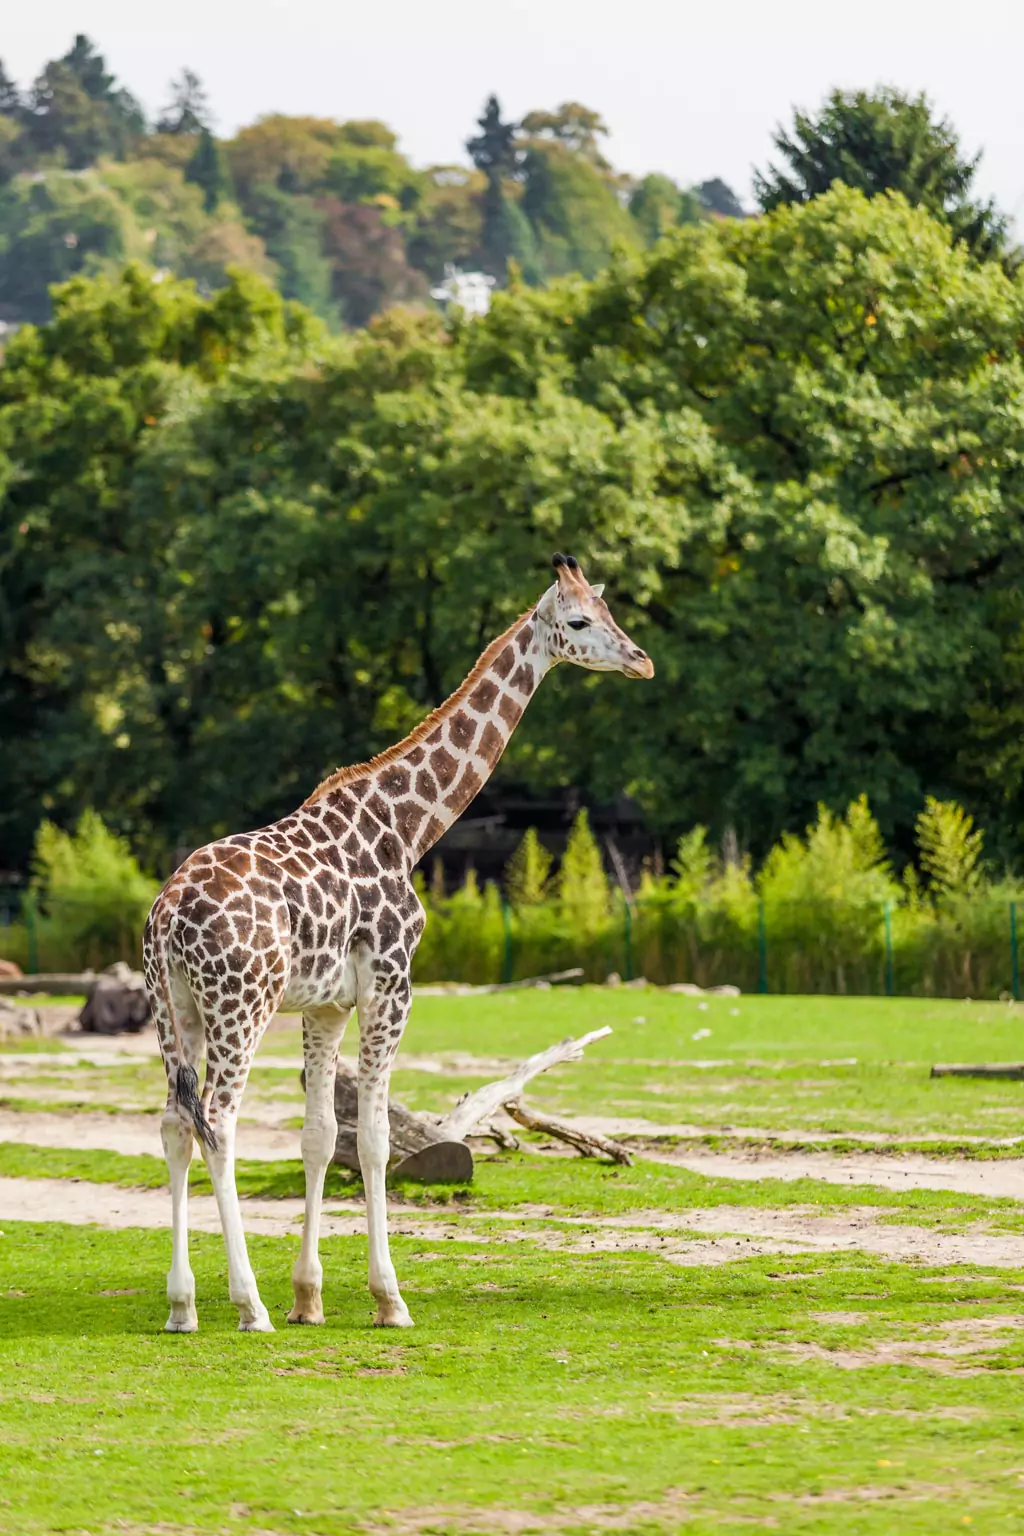 Giraffe in a green background